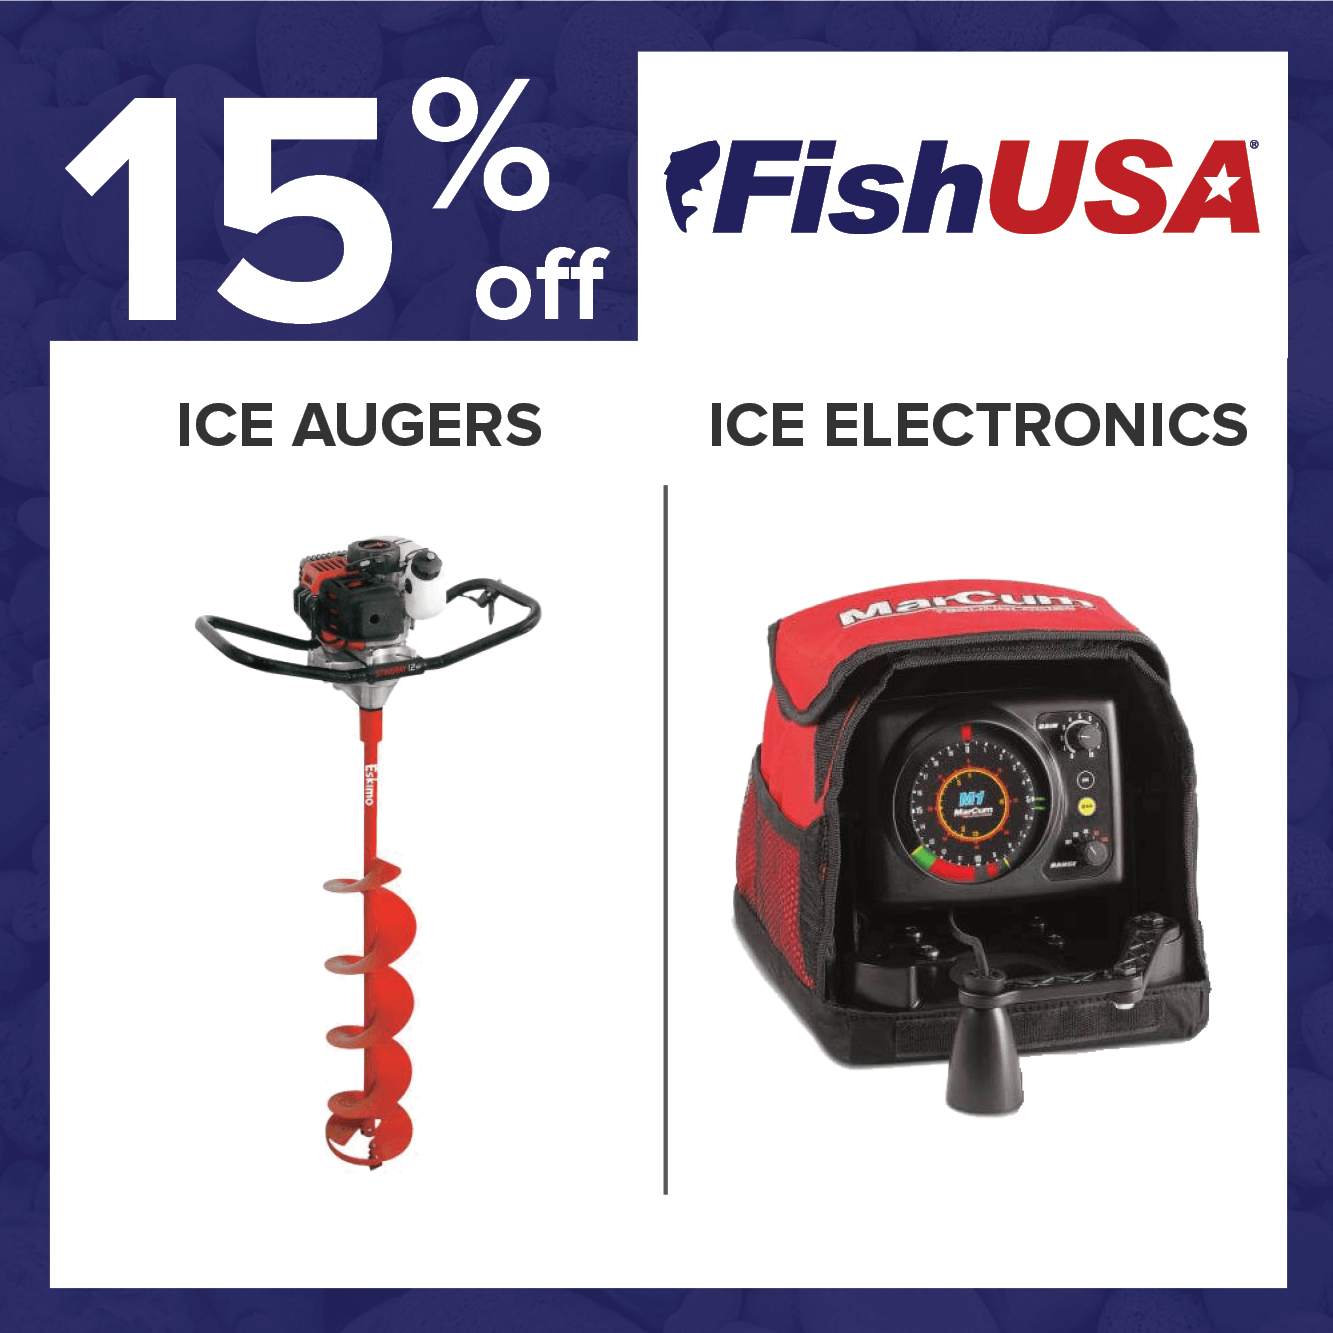 Save 15% on Ice Fishing Augers & Ice Fishing Electronics